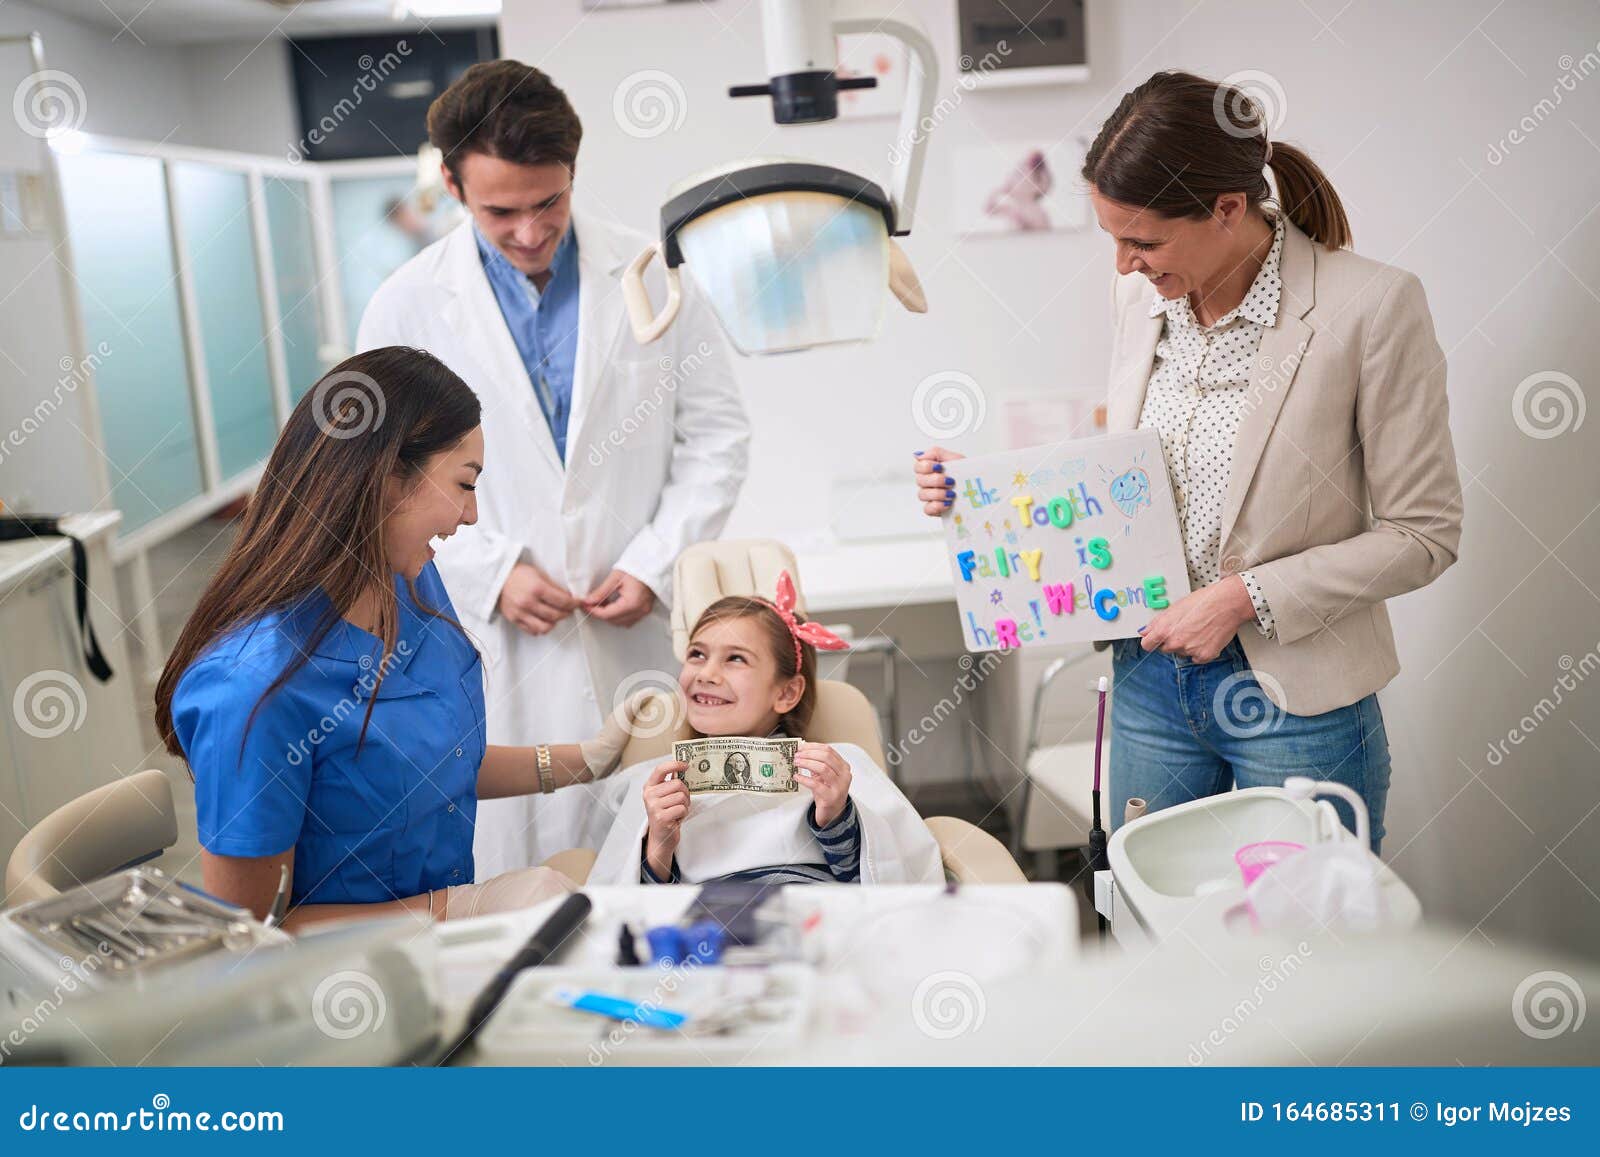 loss baby teeth. dentist examining his girl patient in dentistÃ¢â¬â¢s